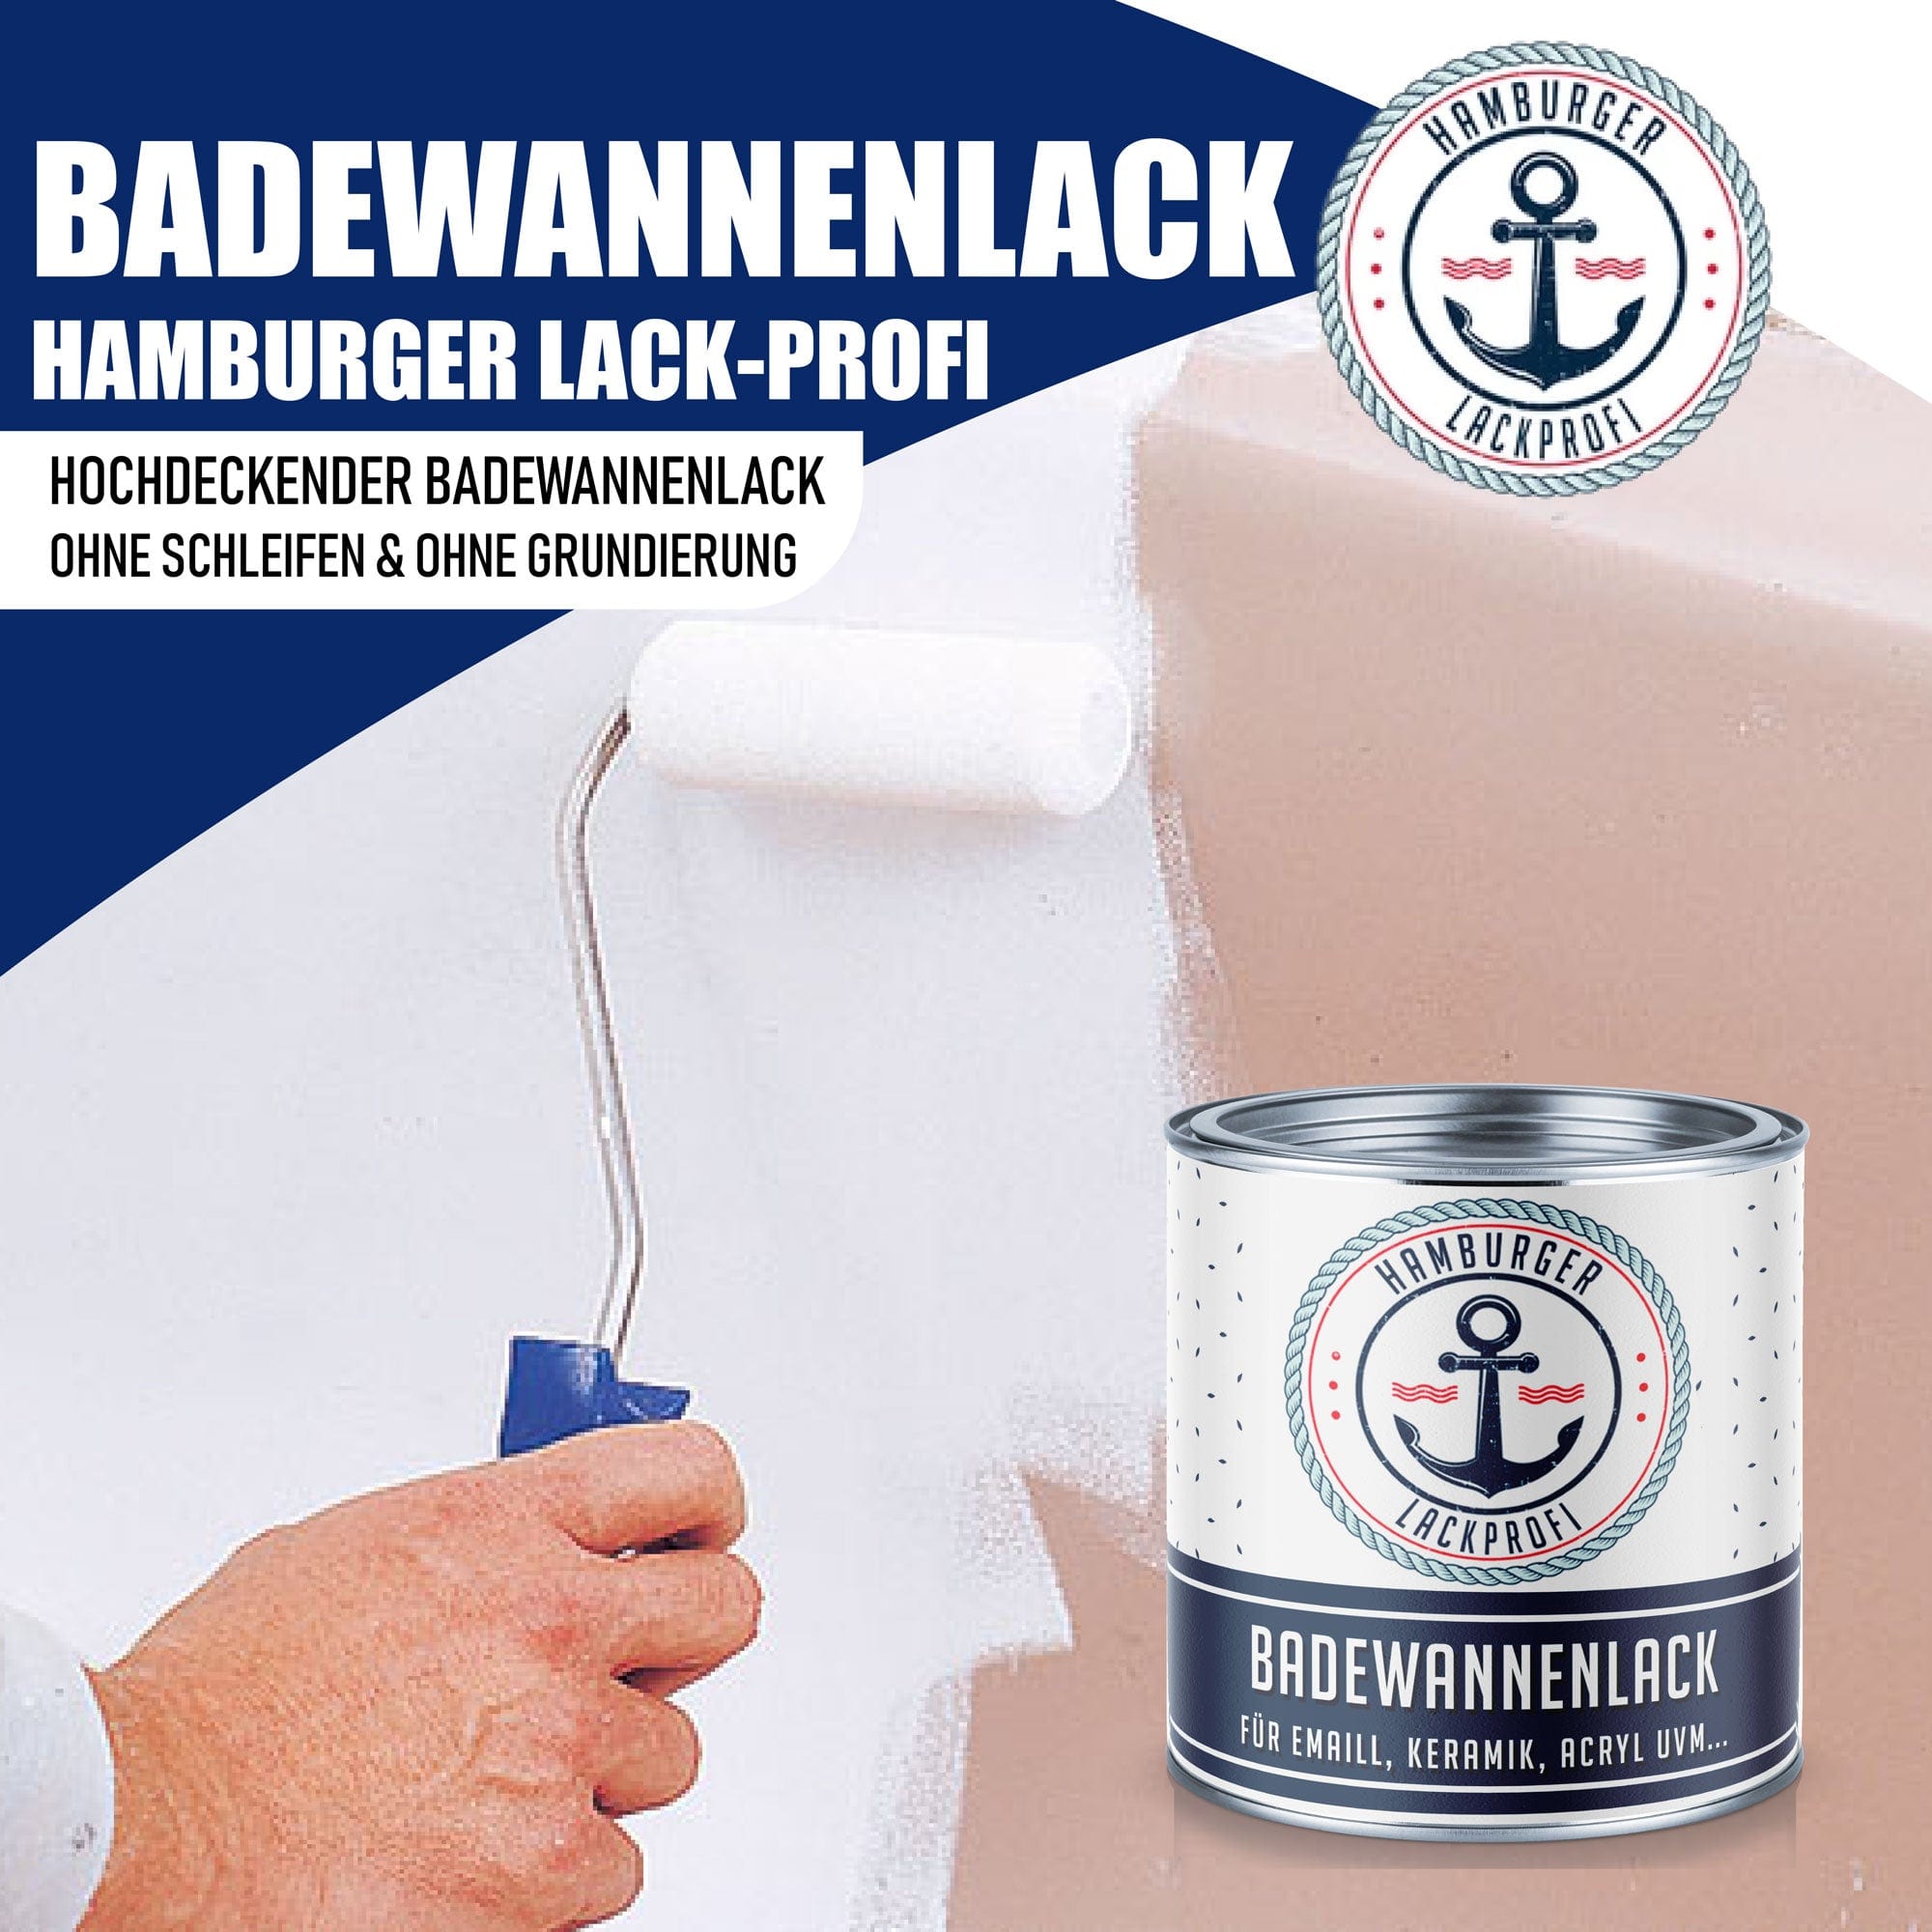 Hamburger Lack-Profi Badewannenlack Hamburger Lack-Profi 2K Badewannenlack Goldgelb RAL 1004 - Glänzend / Seidenmatt / Matt